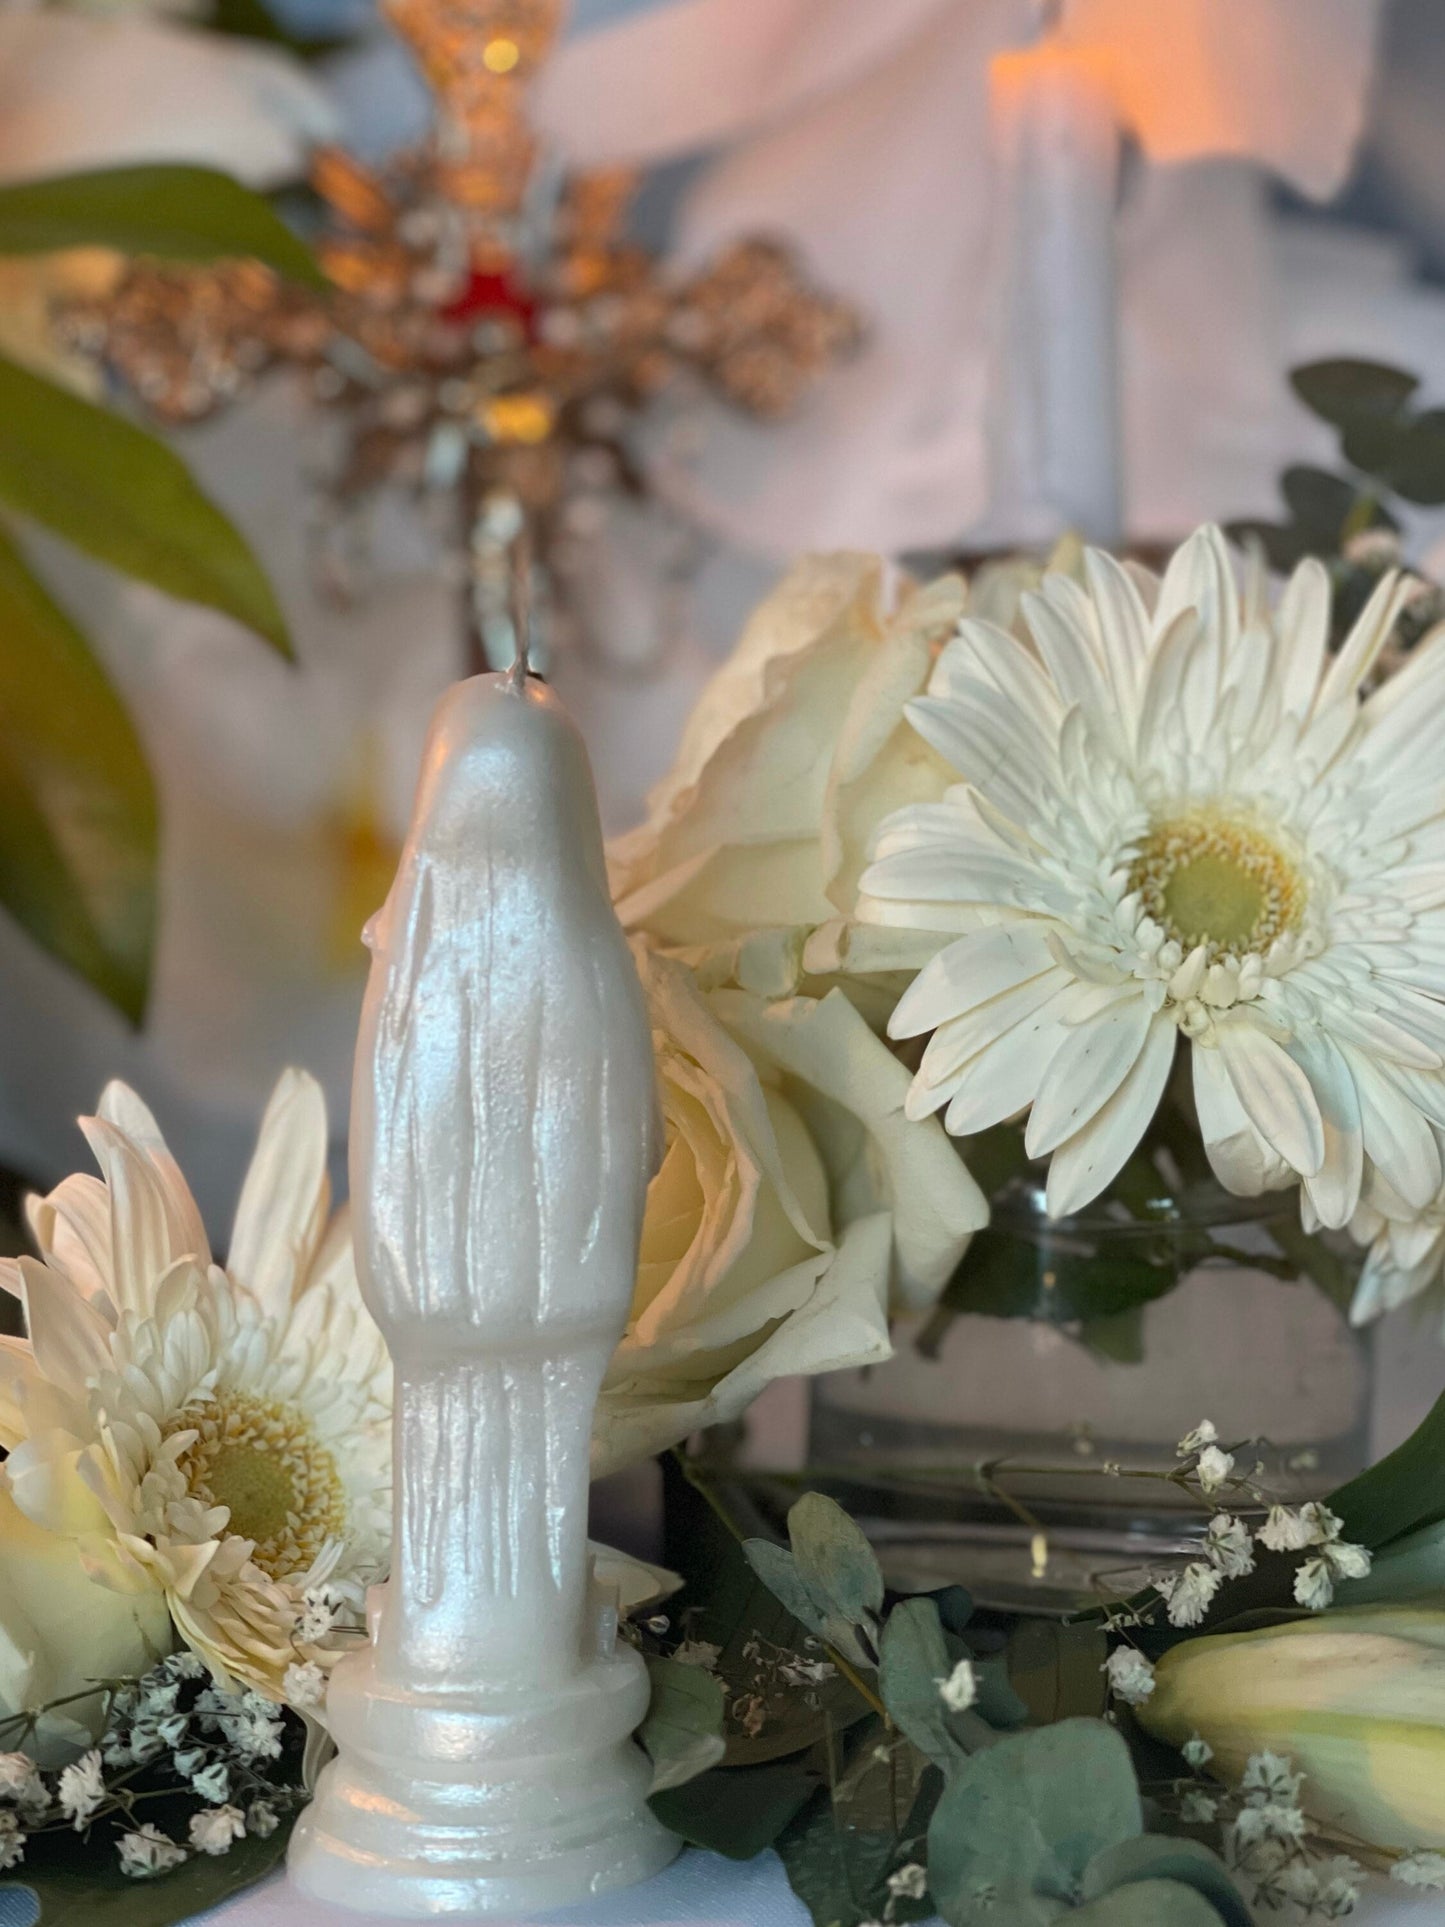 Santa Muerte Blanca Figure Candle + Blessed + Purity + Psychic + Healing